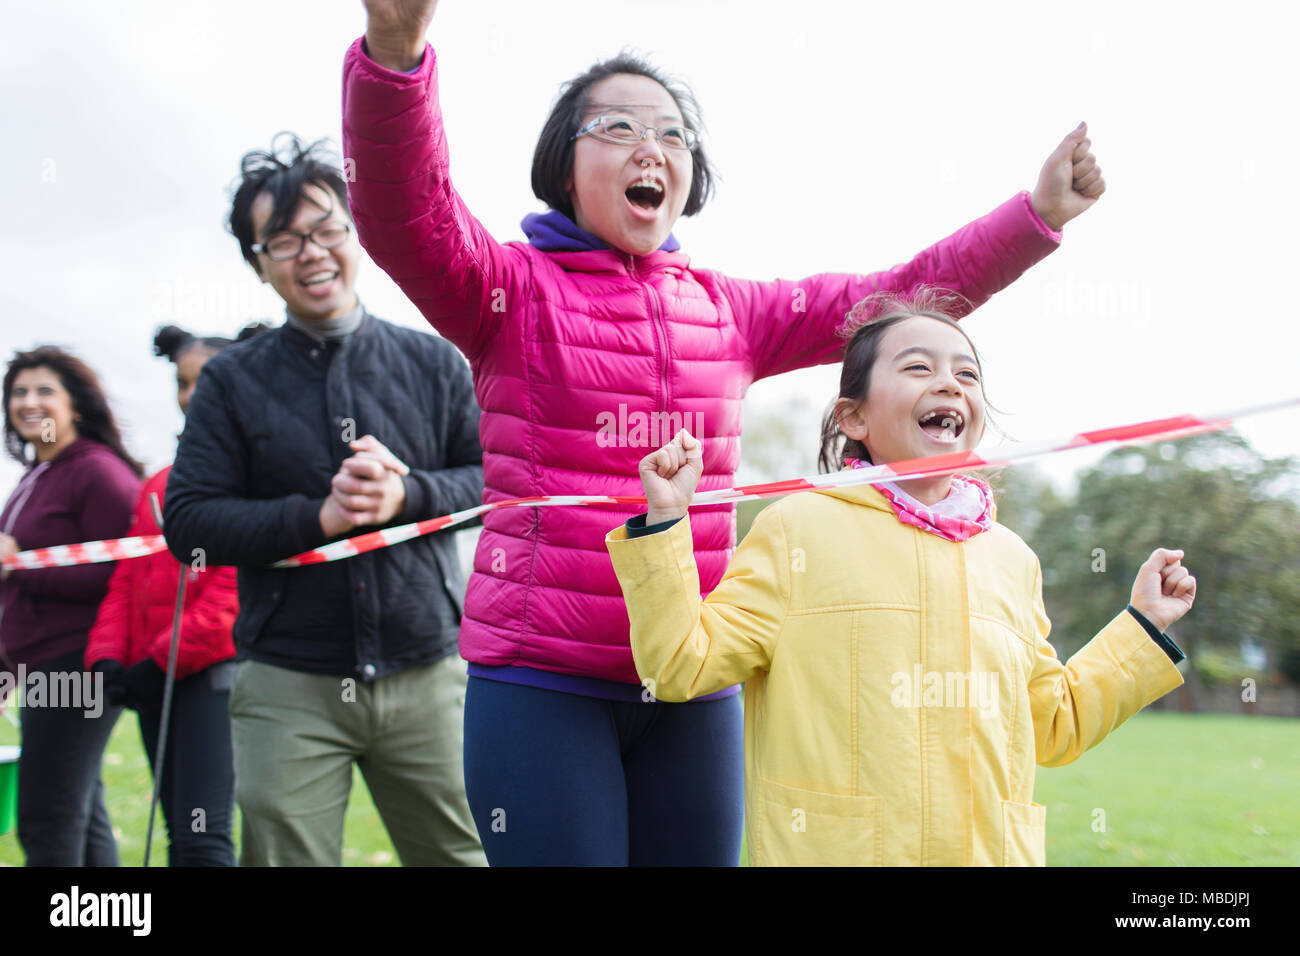 Enthusiastic family spectators cheering at charity run Stock Photo